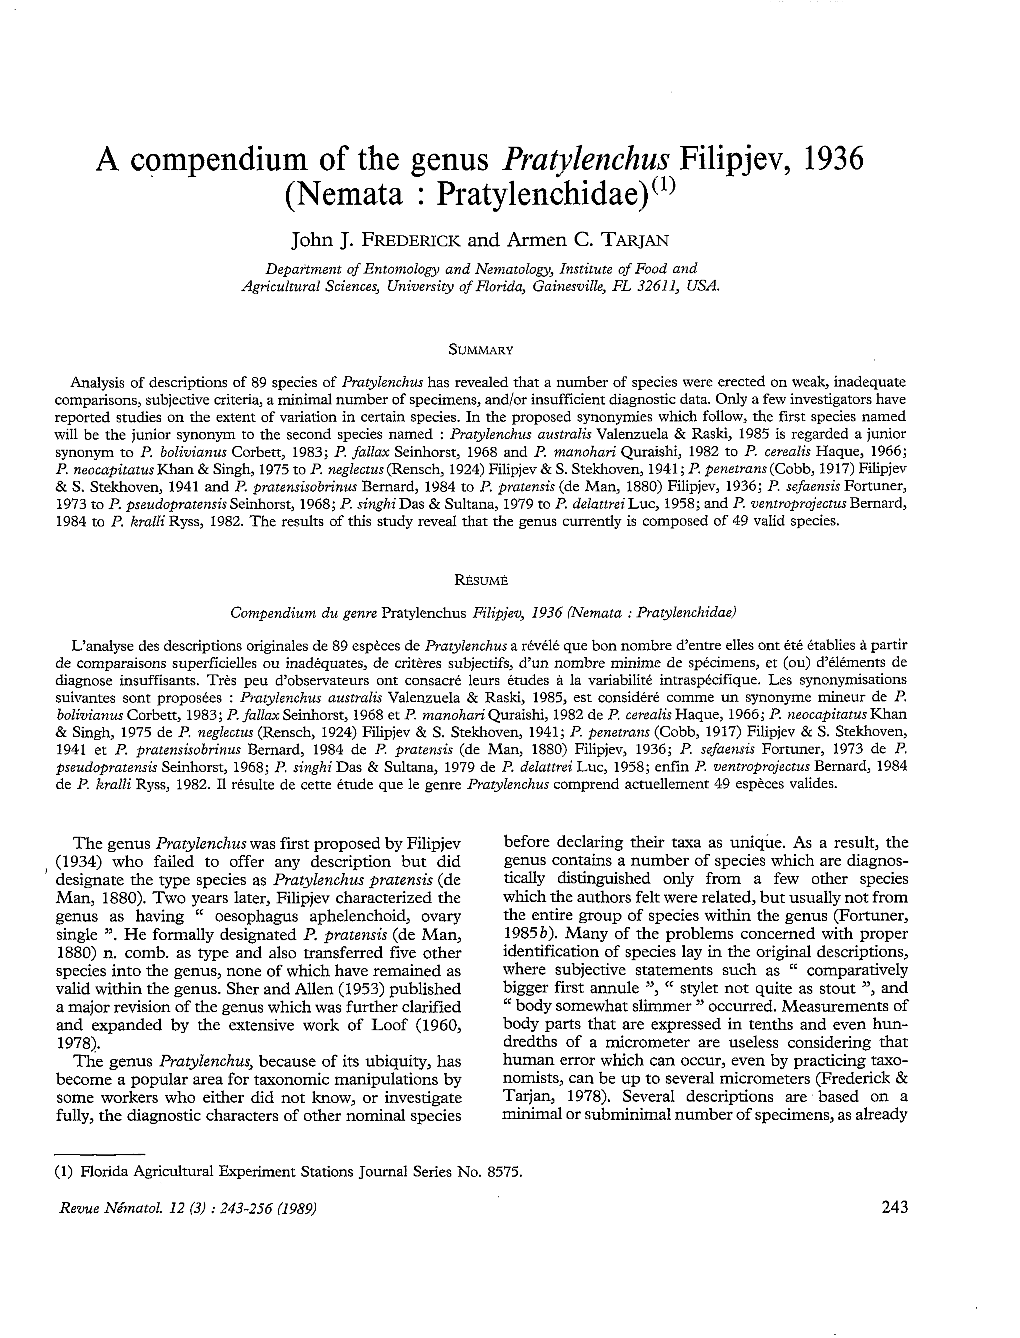 A Compendium of the Genus Pratylenchus Filipjev, 1936 (Nemata : Pratylenchidae)(L) John J